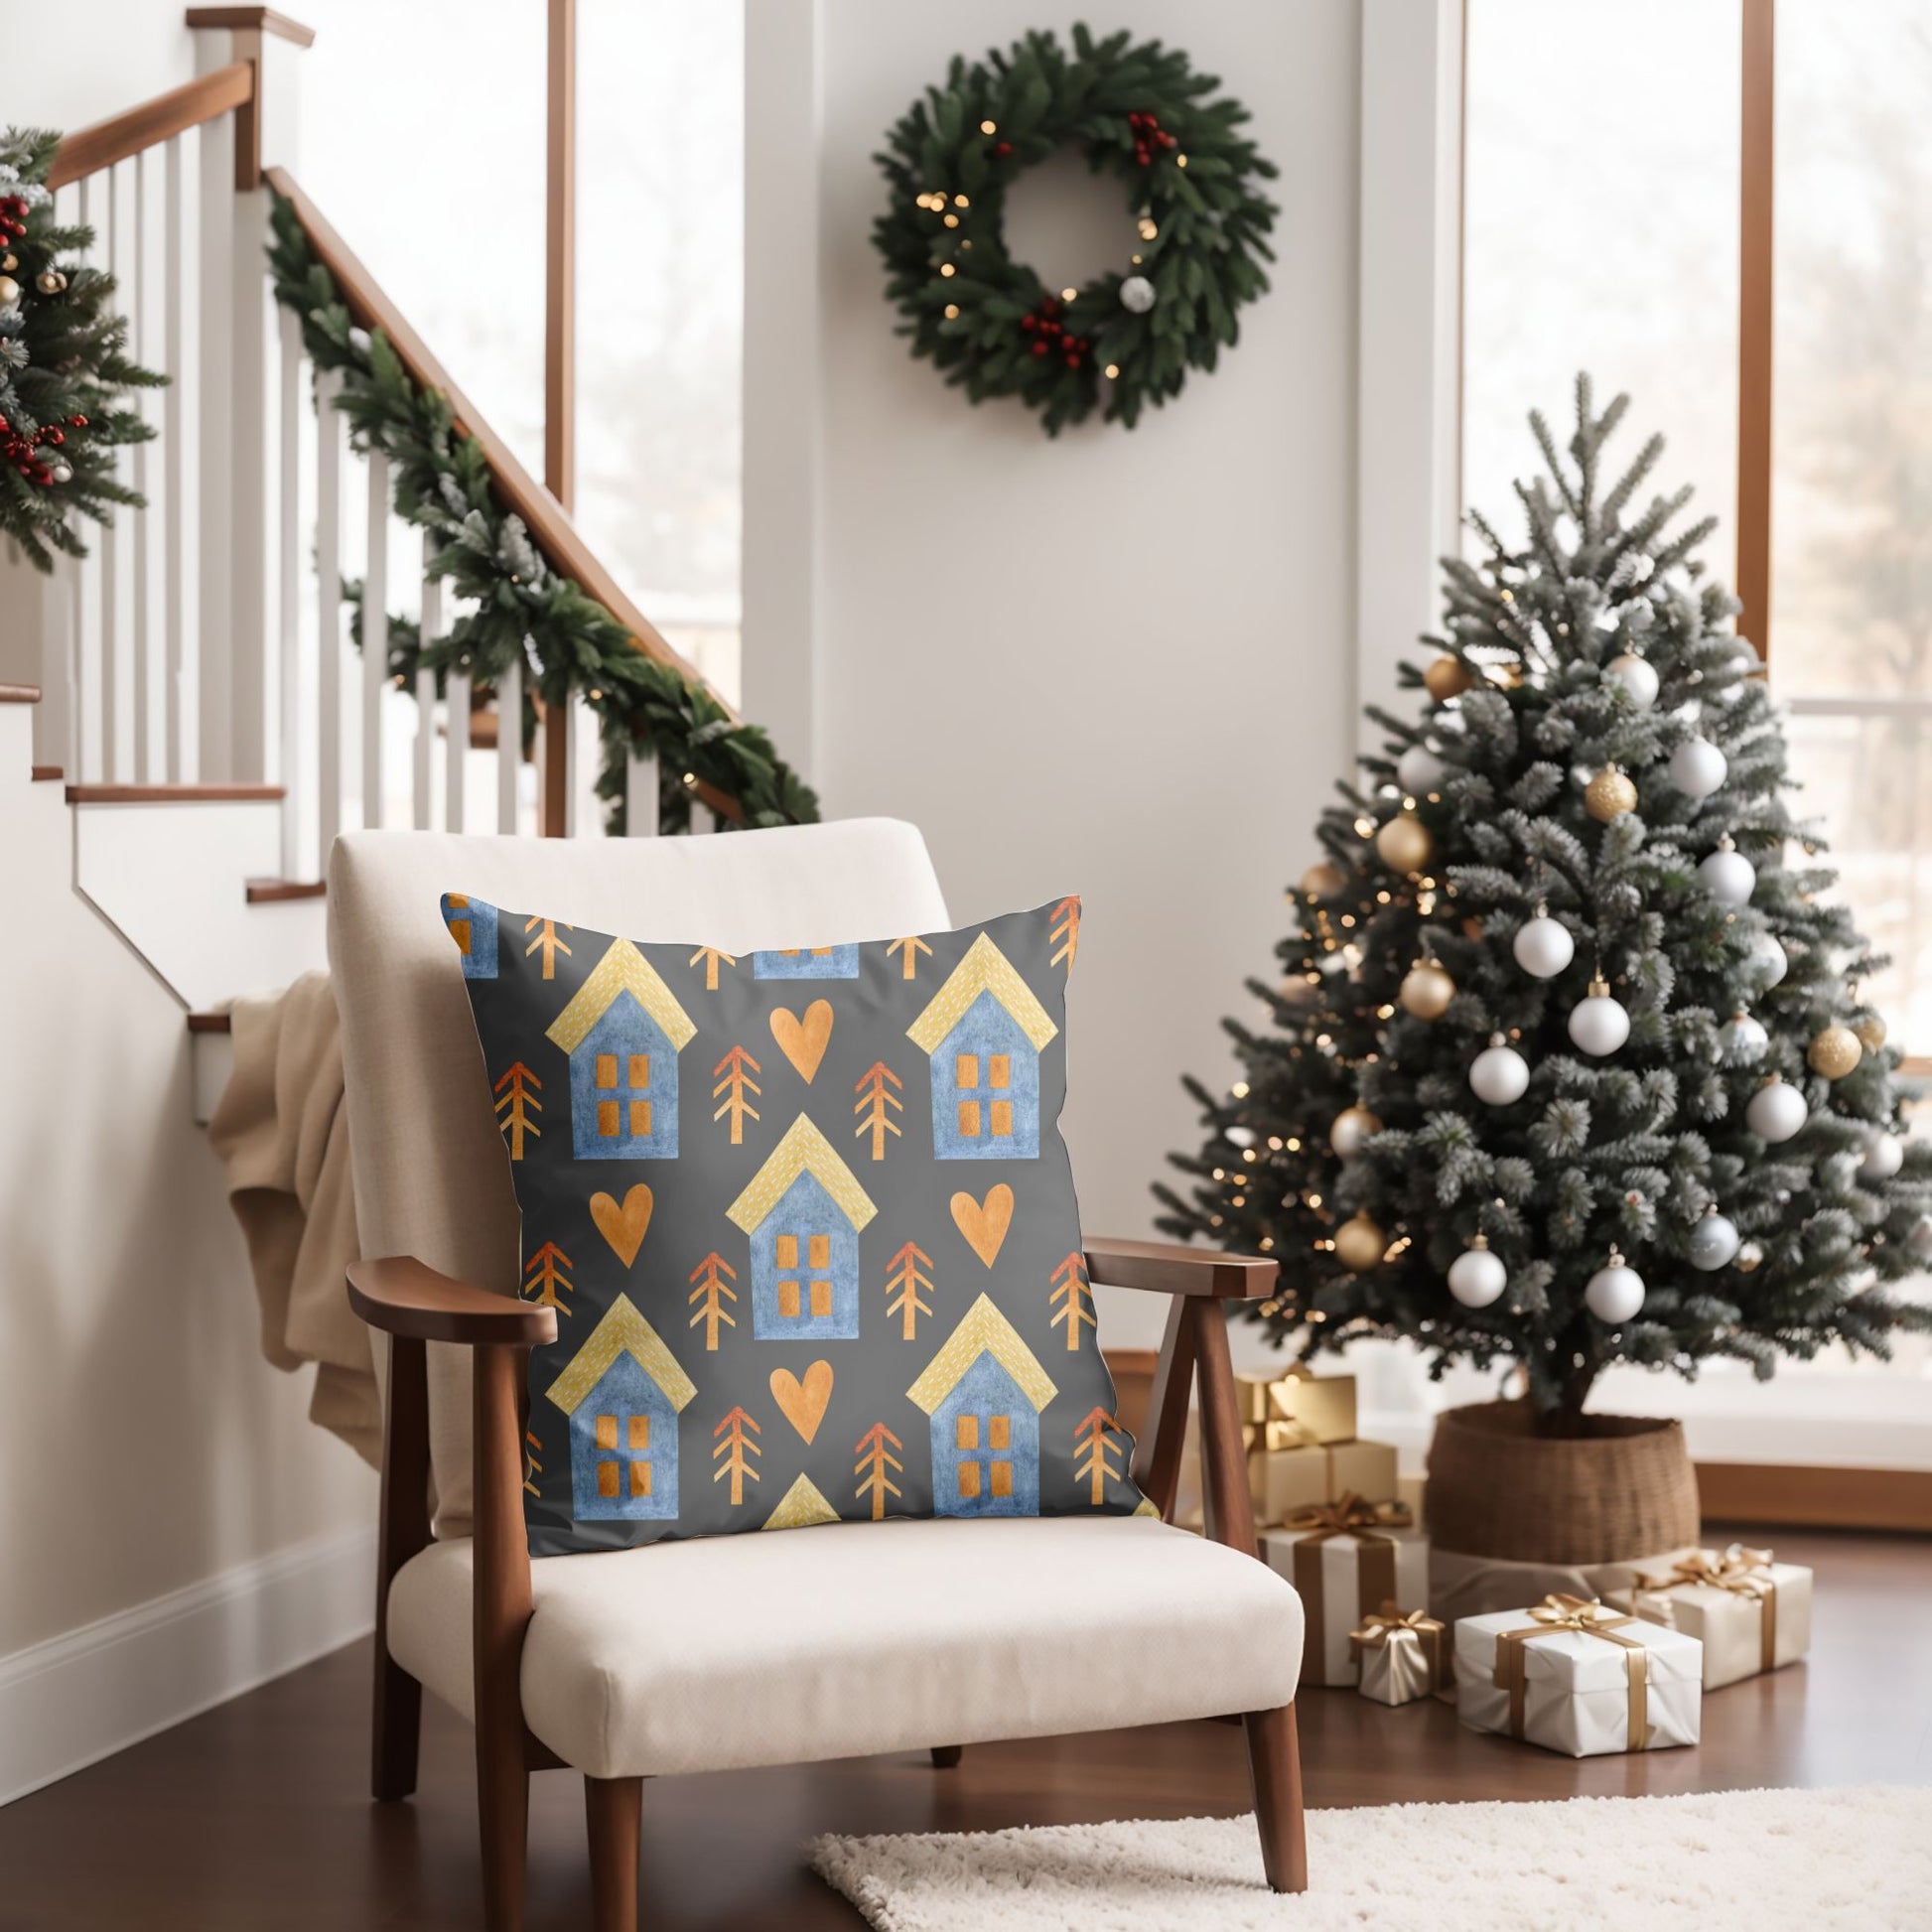 Cozy Living Room Decor with Christmas Home Pillow